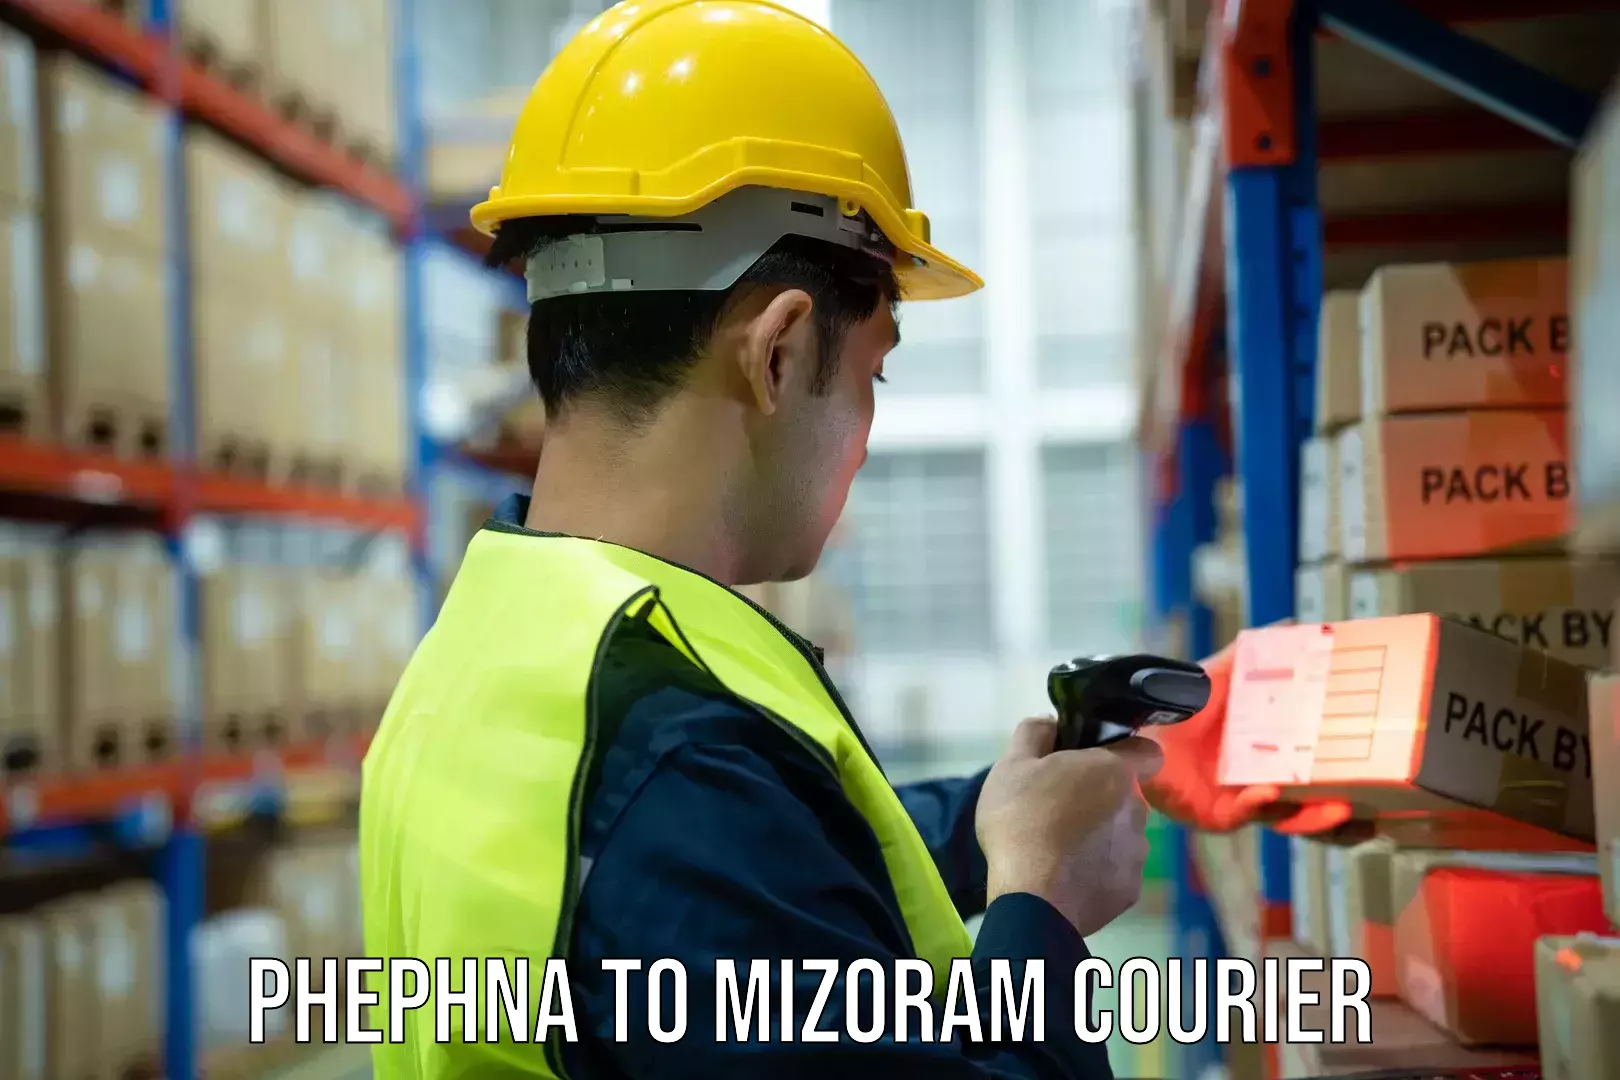 Global courier networks Phephna to Mizoram